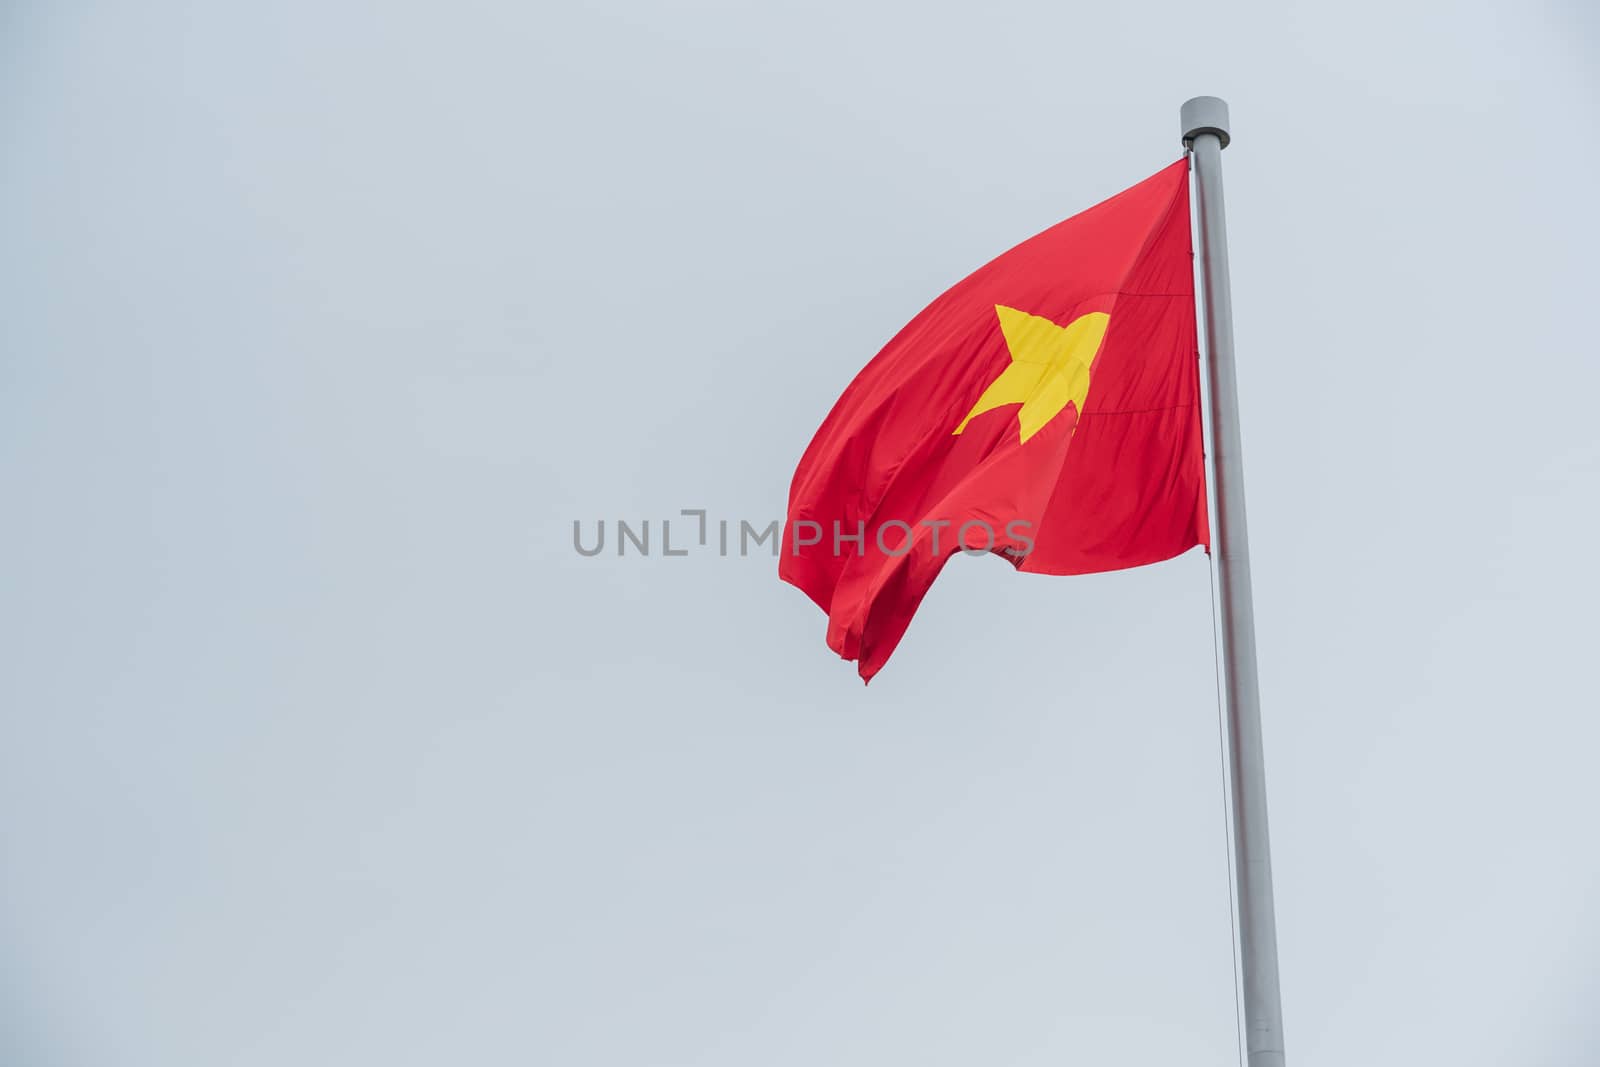 Flag of Vietnam In the sky.